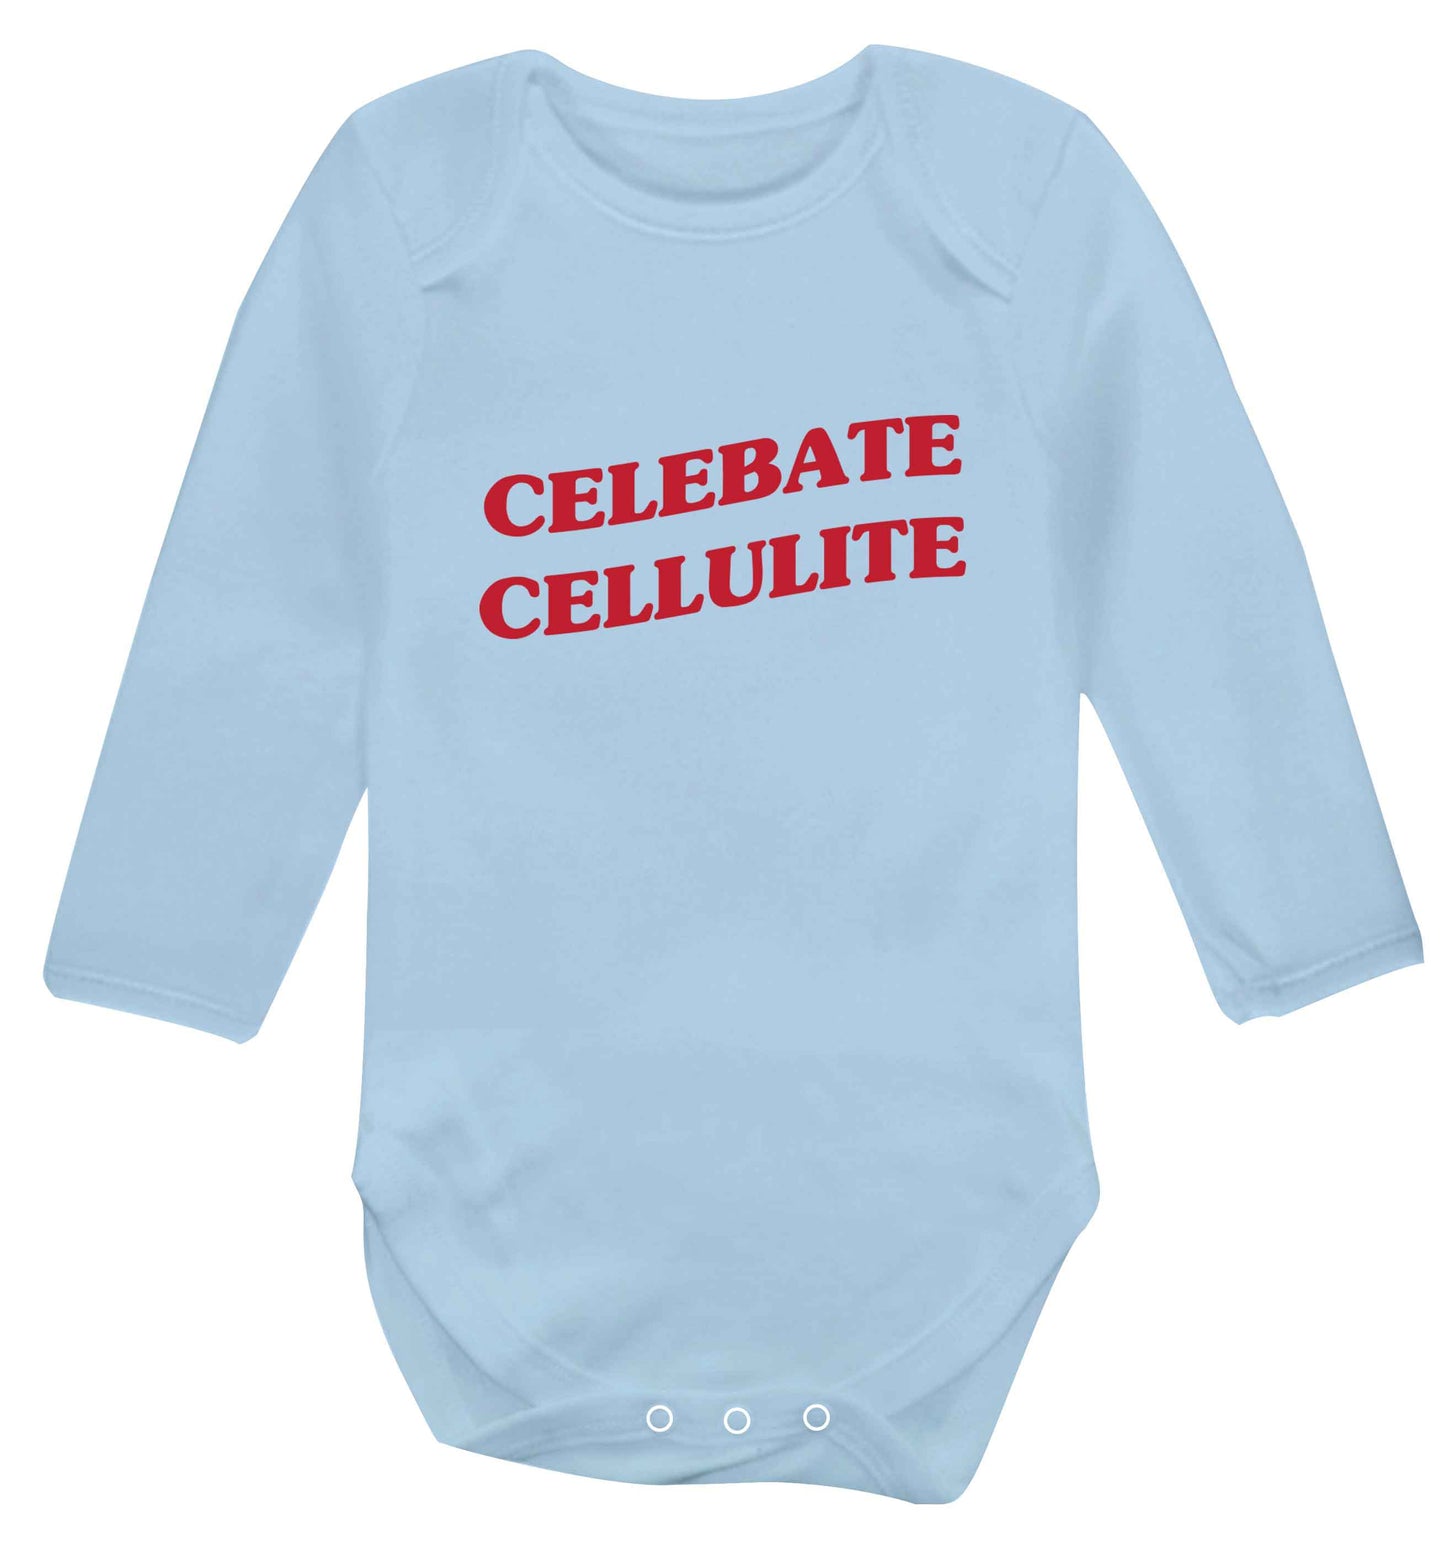 Celebrate cellulite baby vest long sleeved pale blue 6-12 months